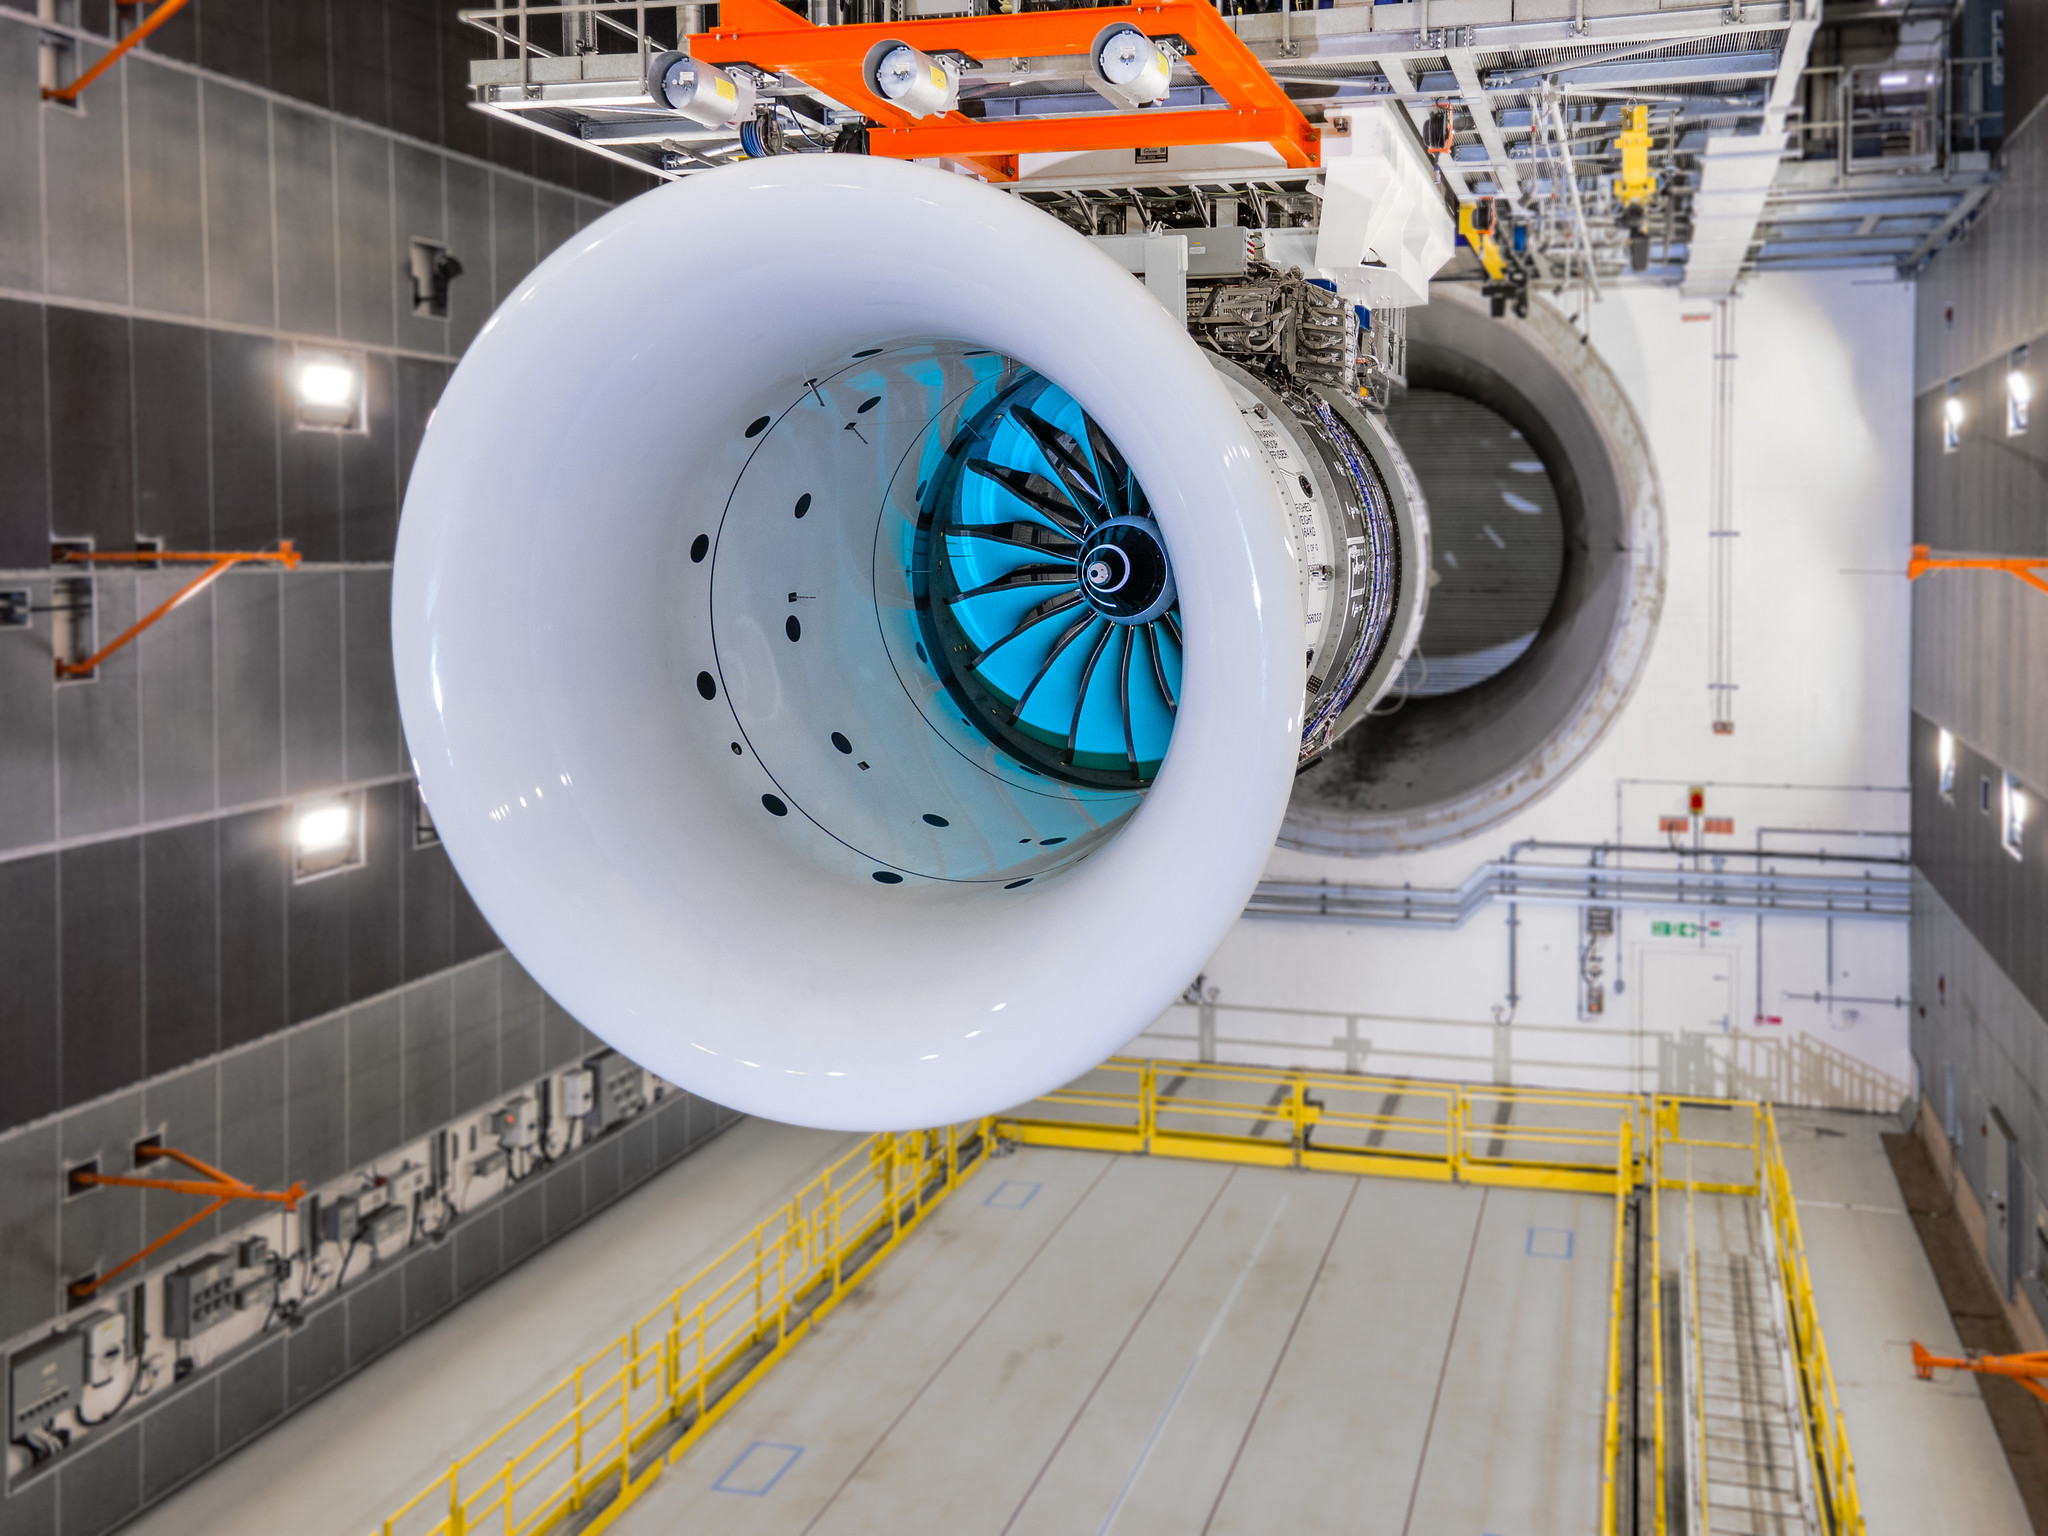 Rolls-Royce successfully tests its new UltraFan technology demonstrator